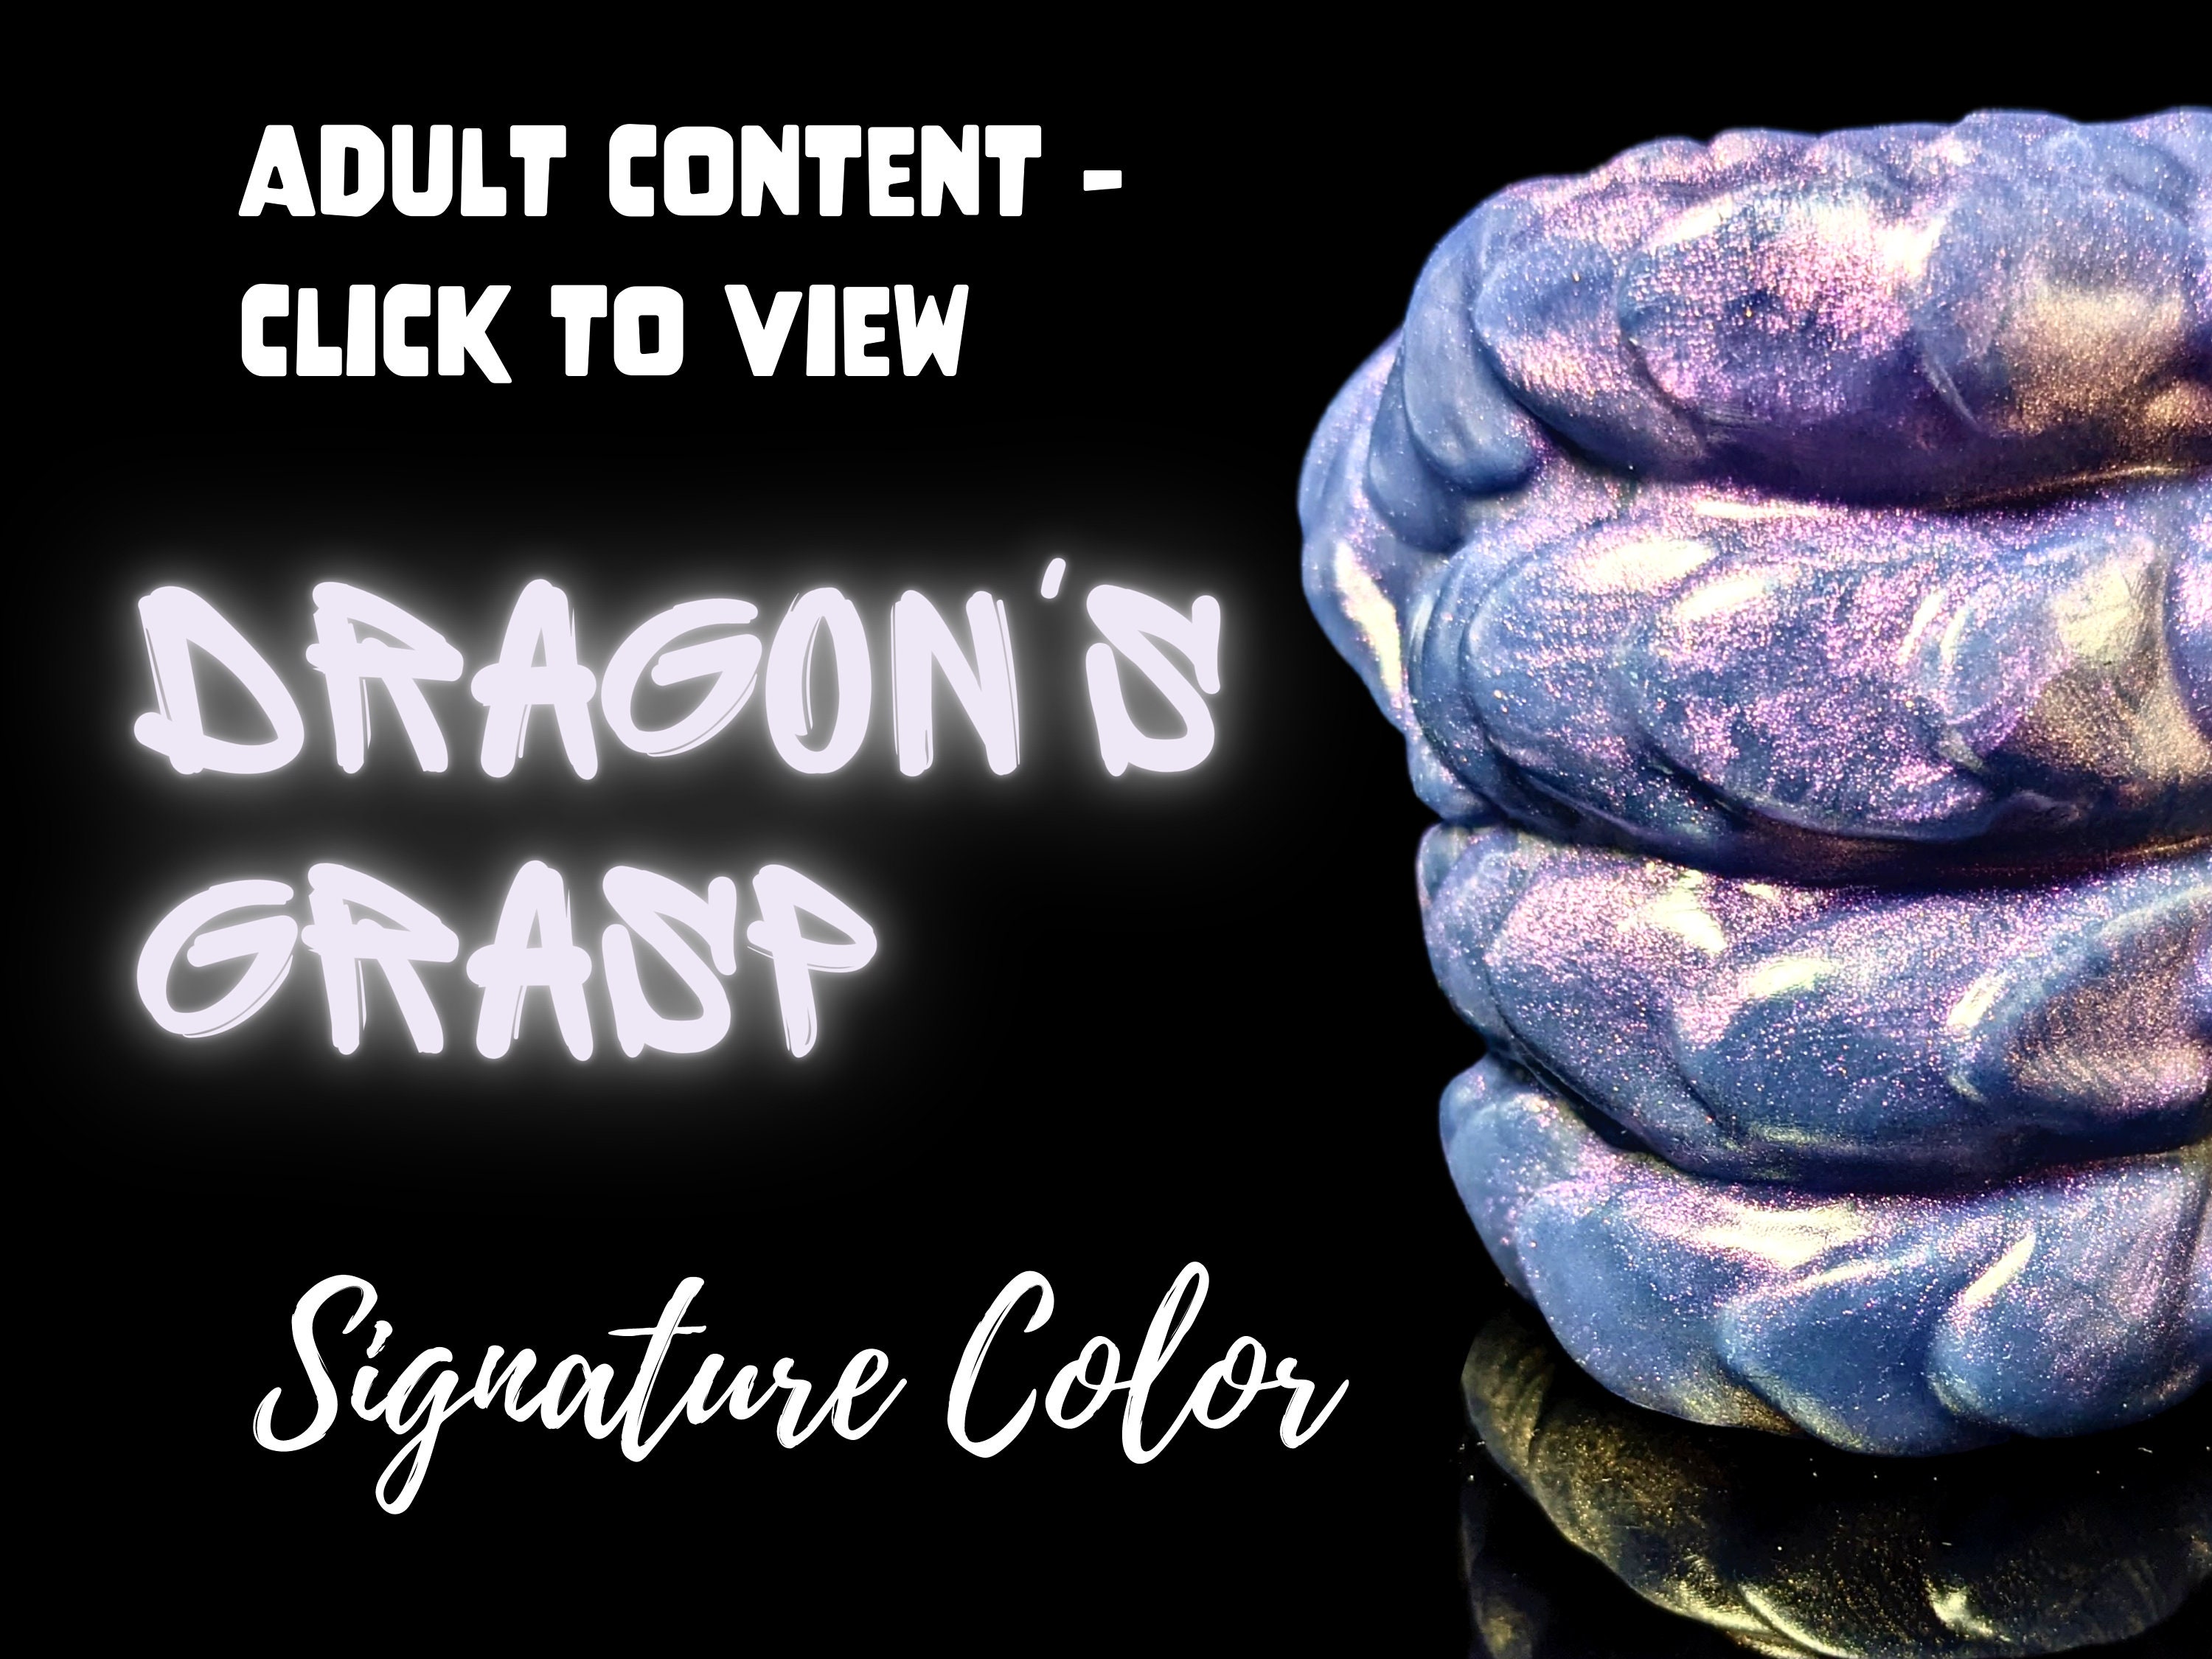 Fantasy Dragons Grasp Stroker Signature Color Open or